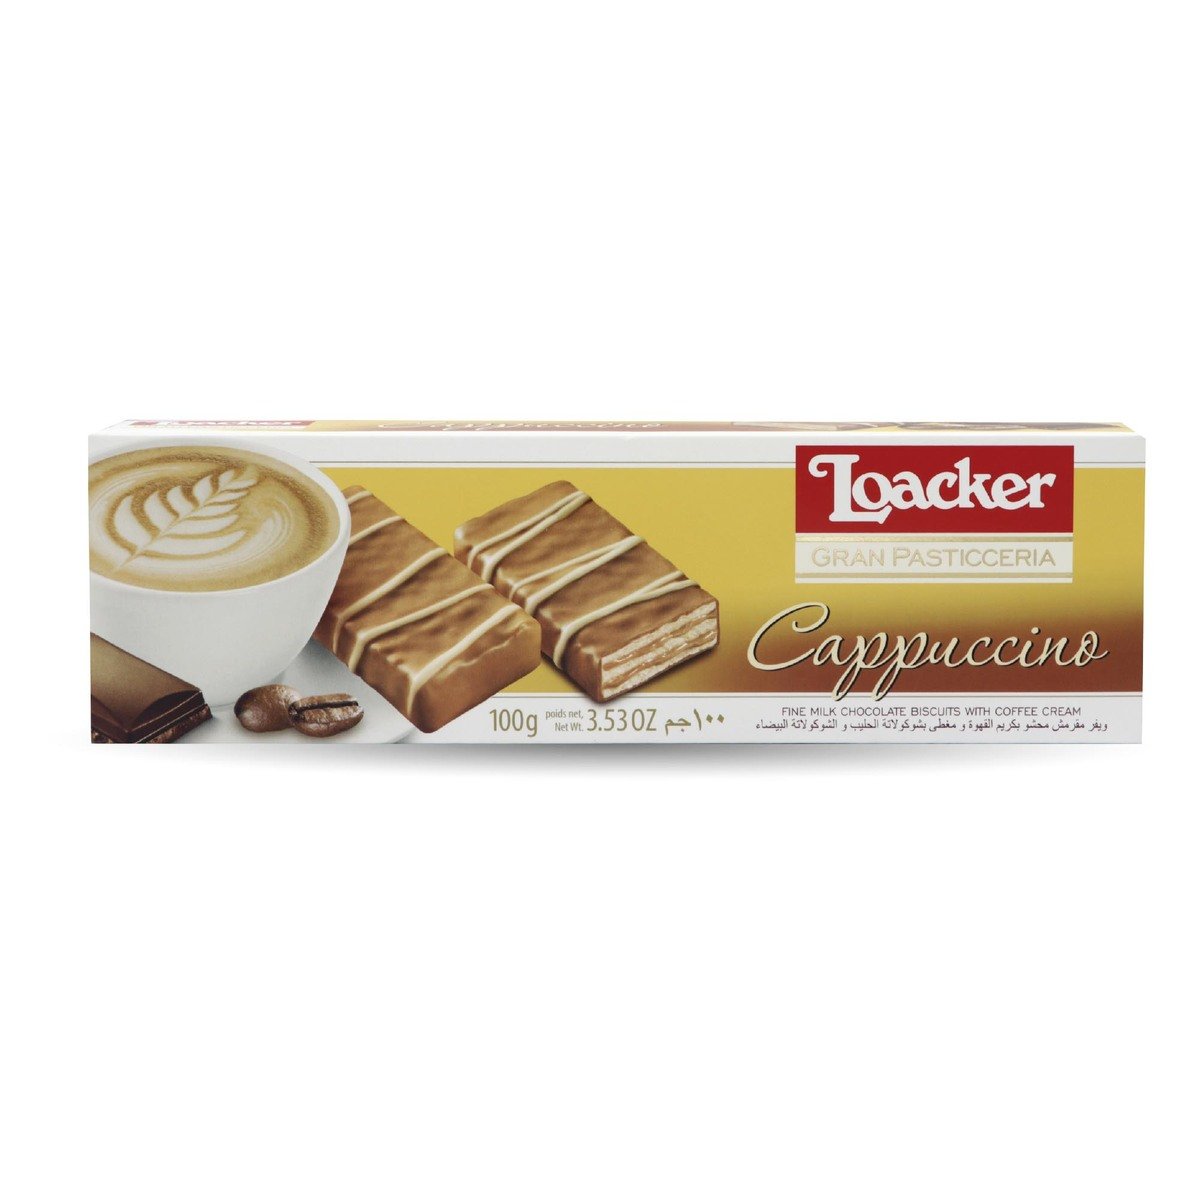 Locker Gran Pasticceria Biscuit Cappuccino 100g